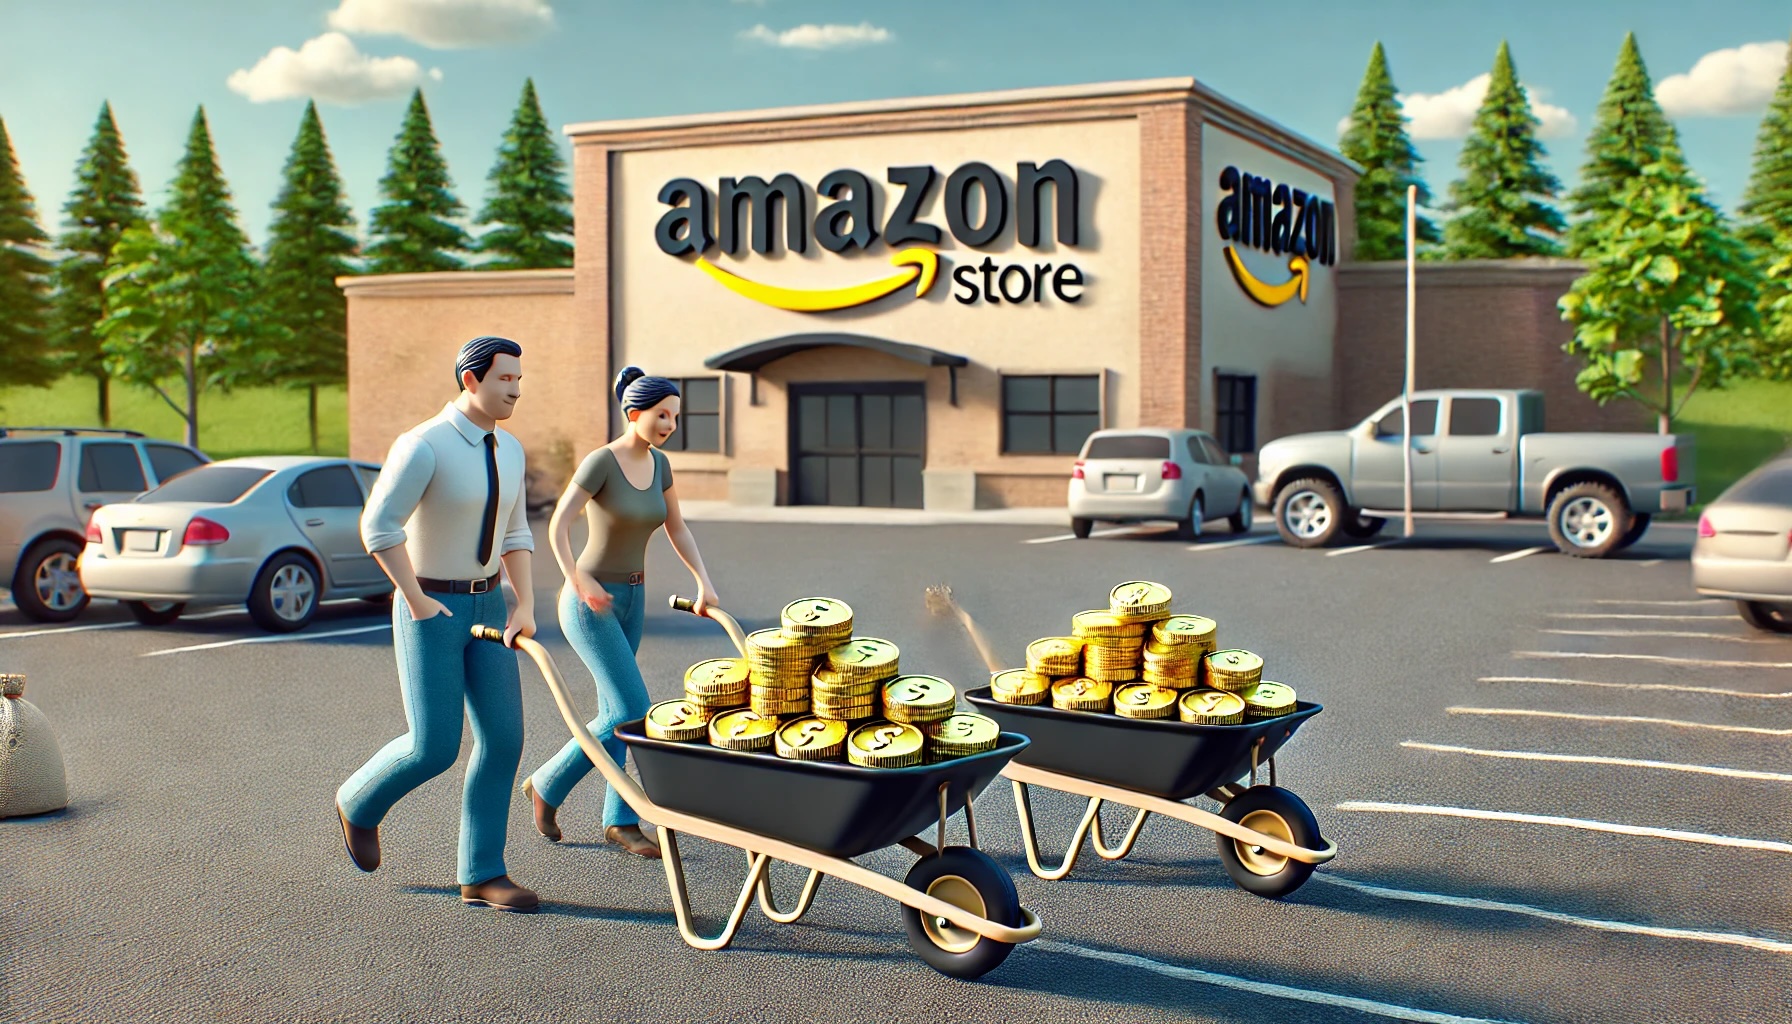 parents pushing wheelbarrows full of money across an Amazon parking lot towards an Amazon store